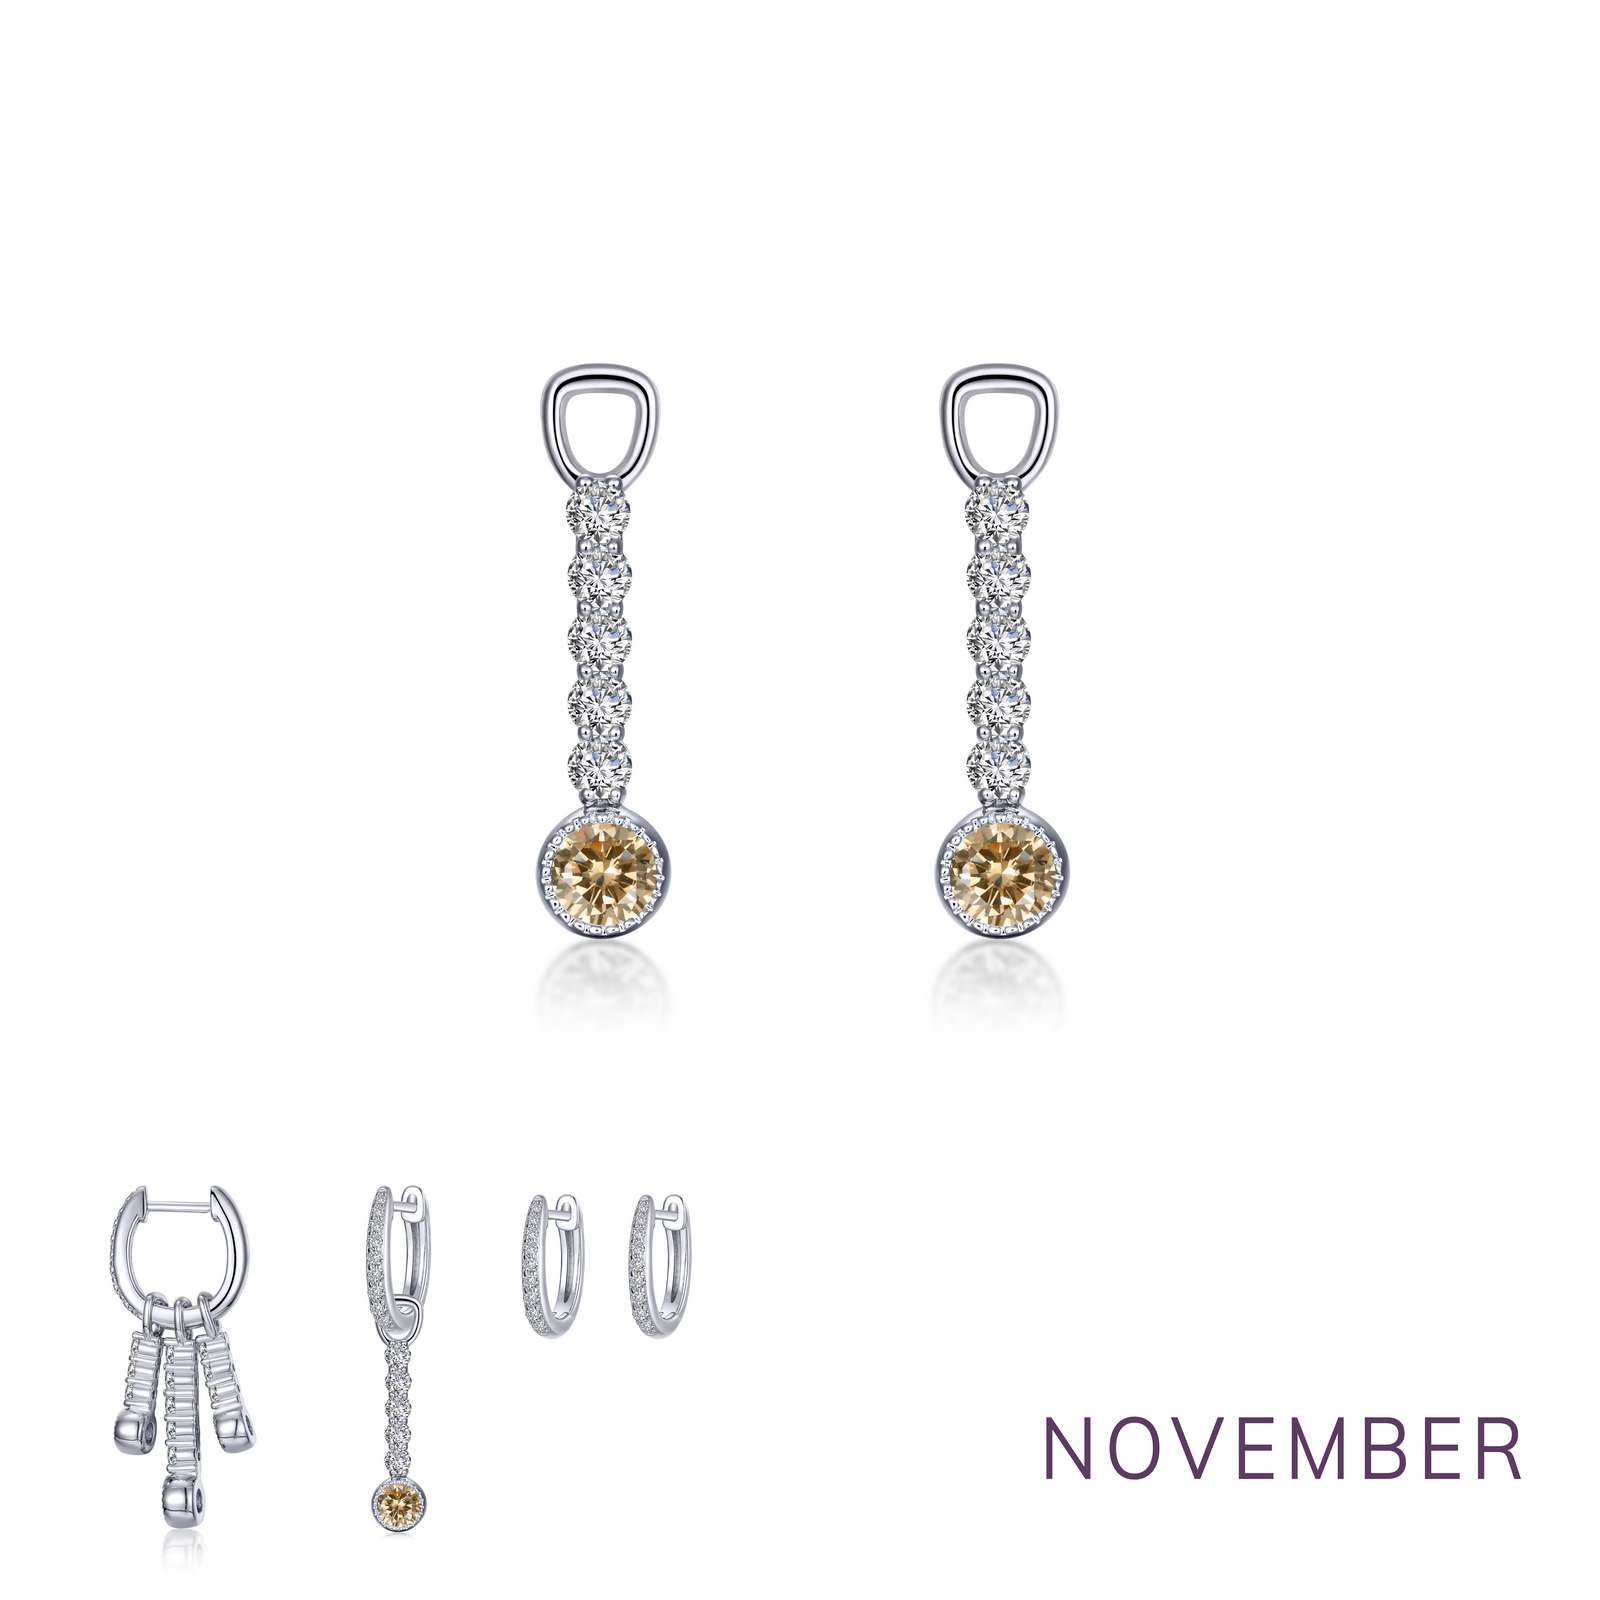 Birthstone November Platinum Bonded Earrings Wood's Jewelers Mt. Pleasant, PA